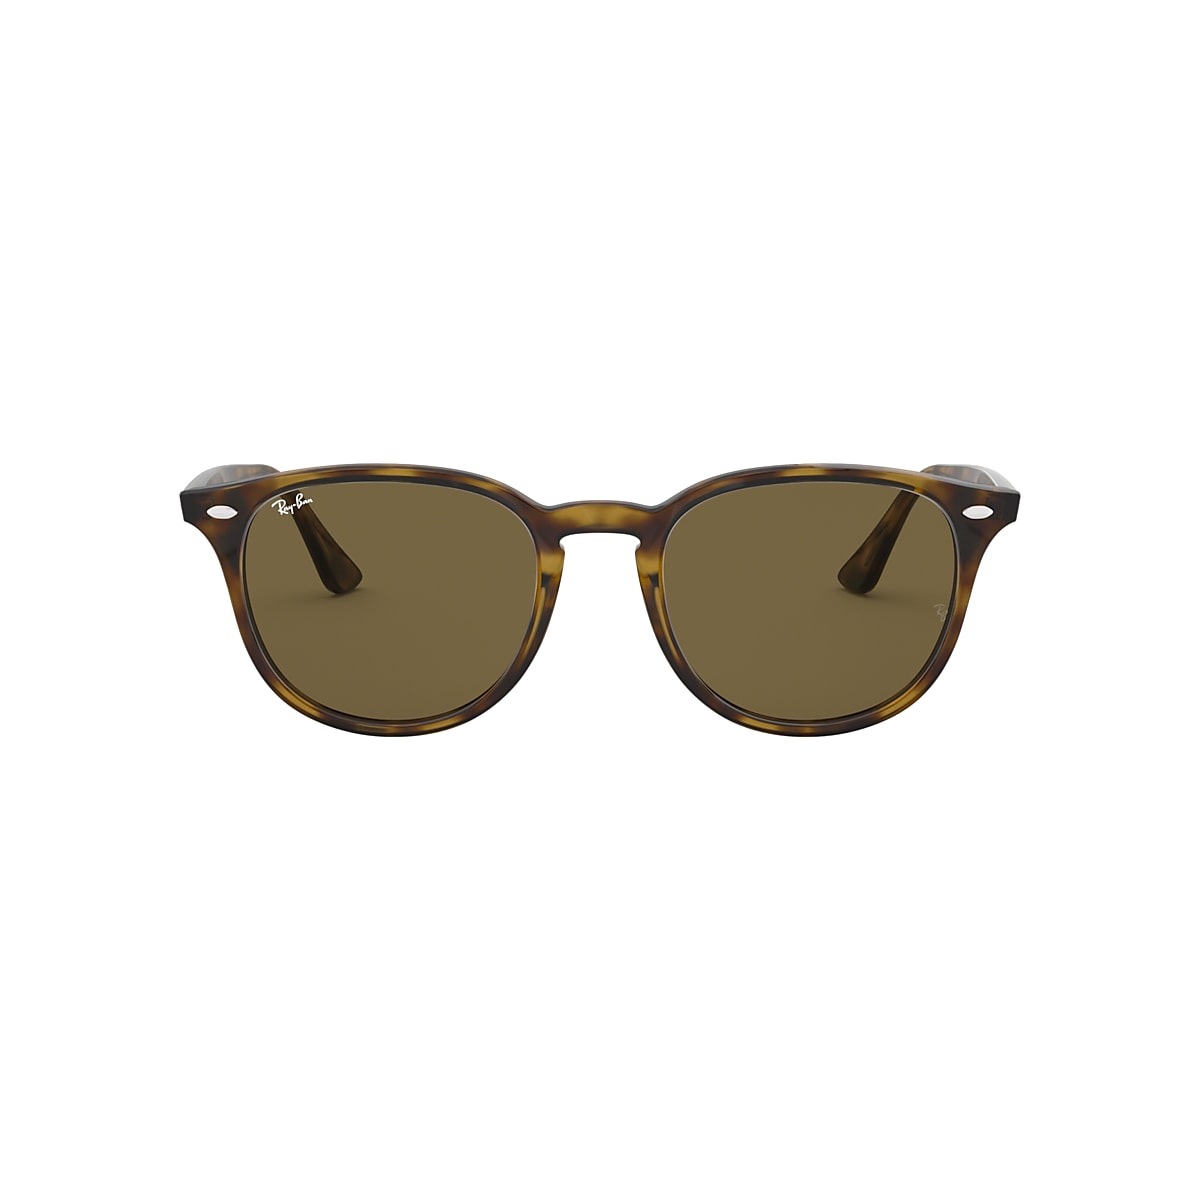 Ray-Ban RB4259 51 Dark Brown & Tortoise Sunglasses | Sunglass Hut USA